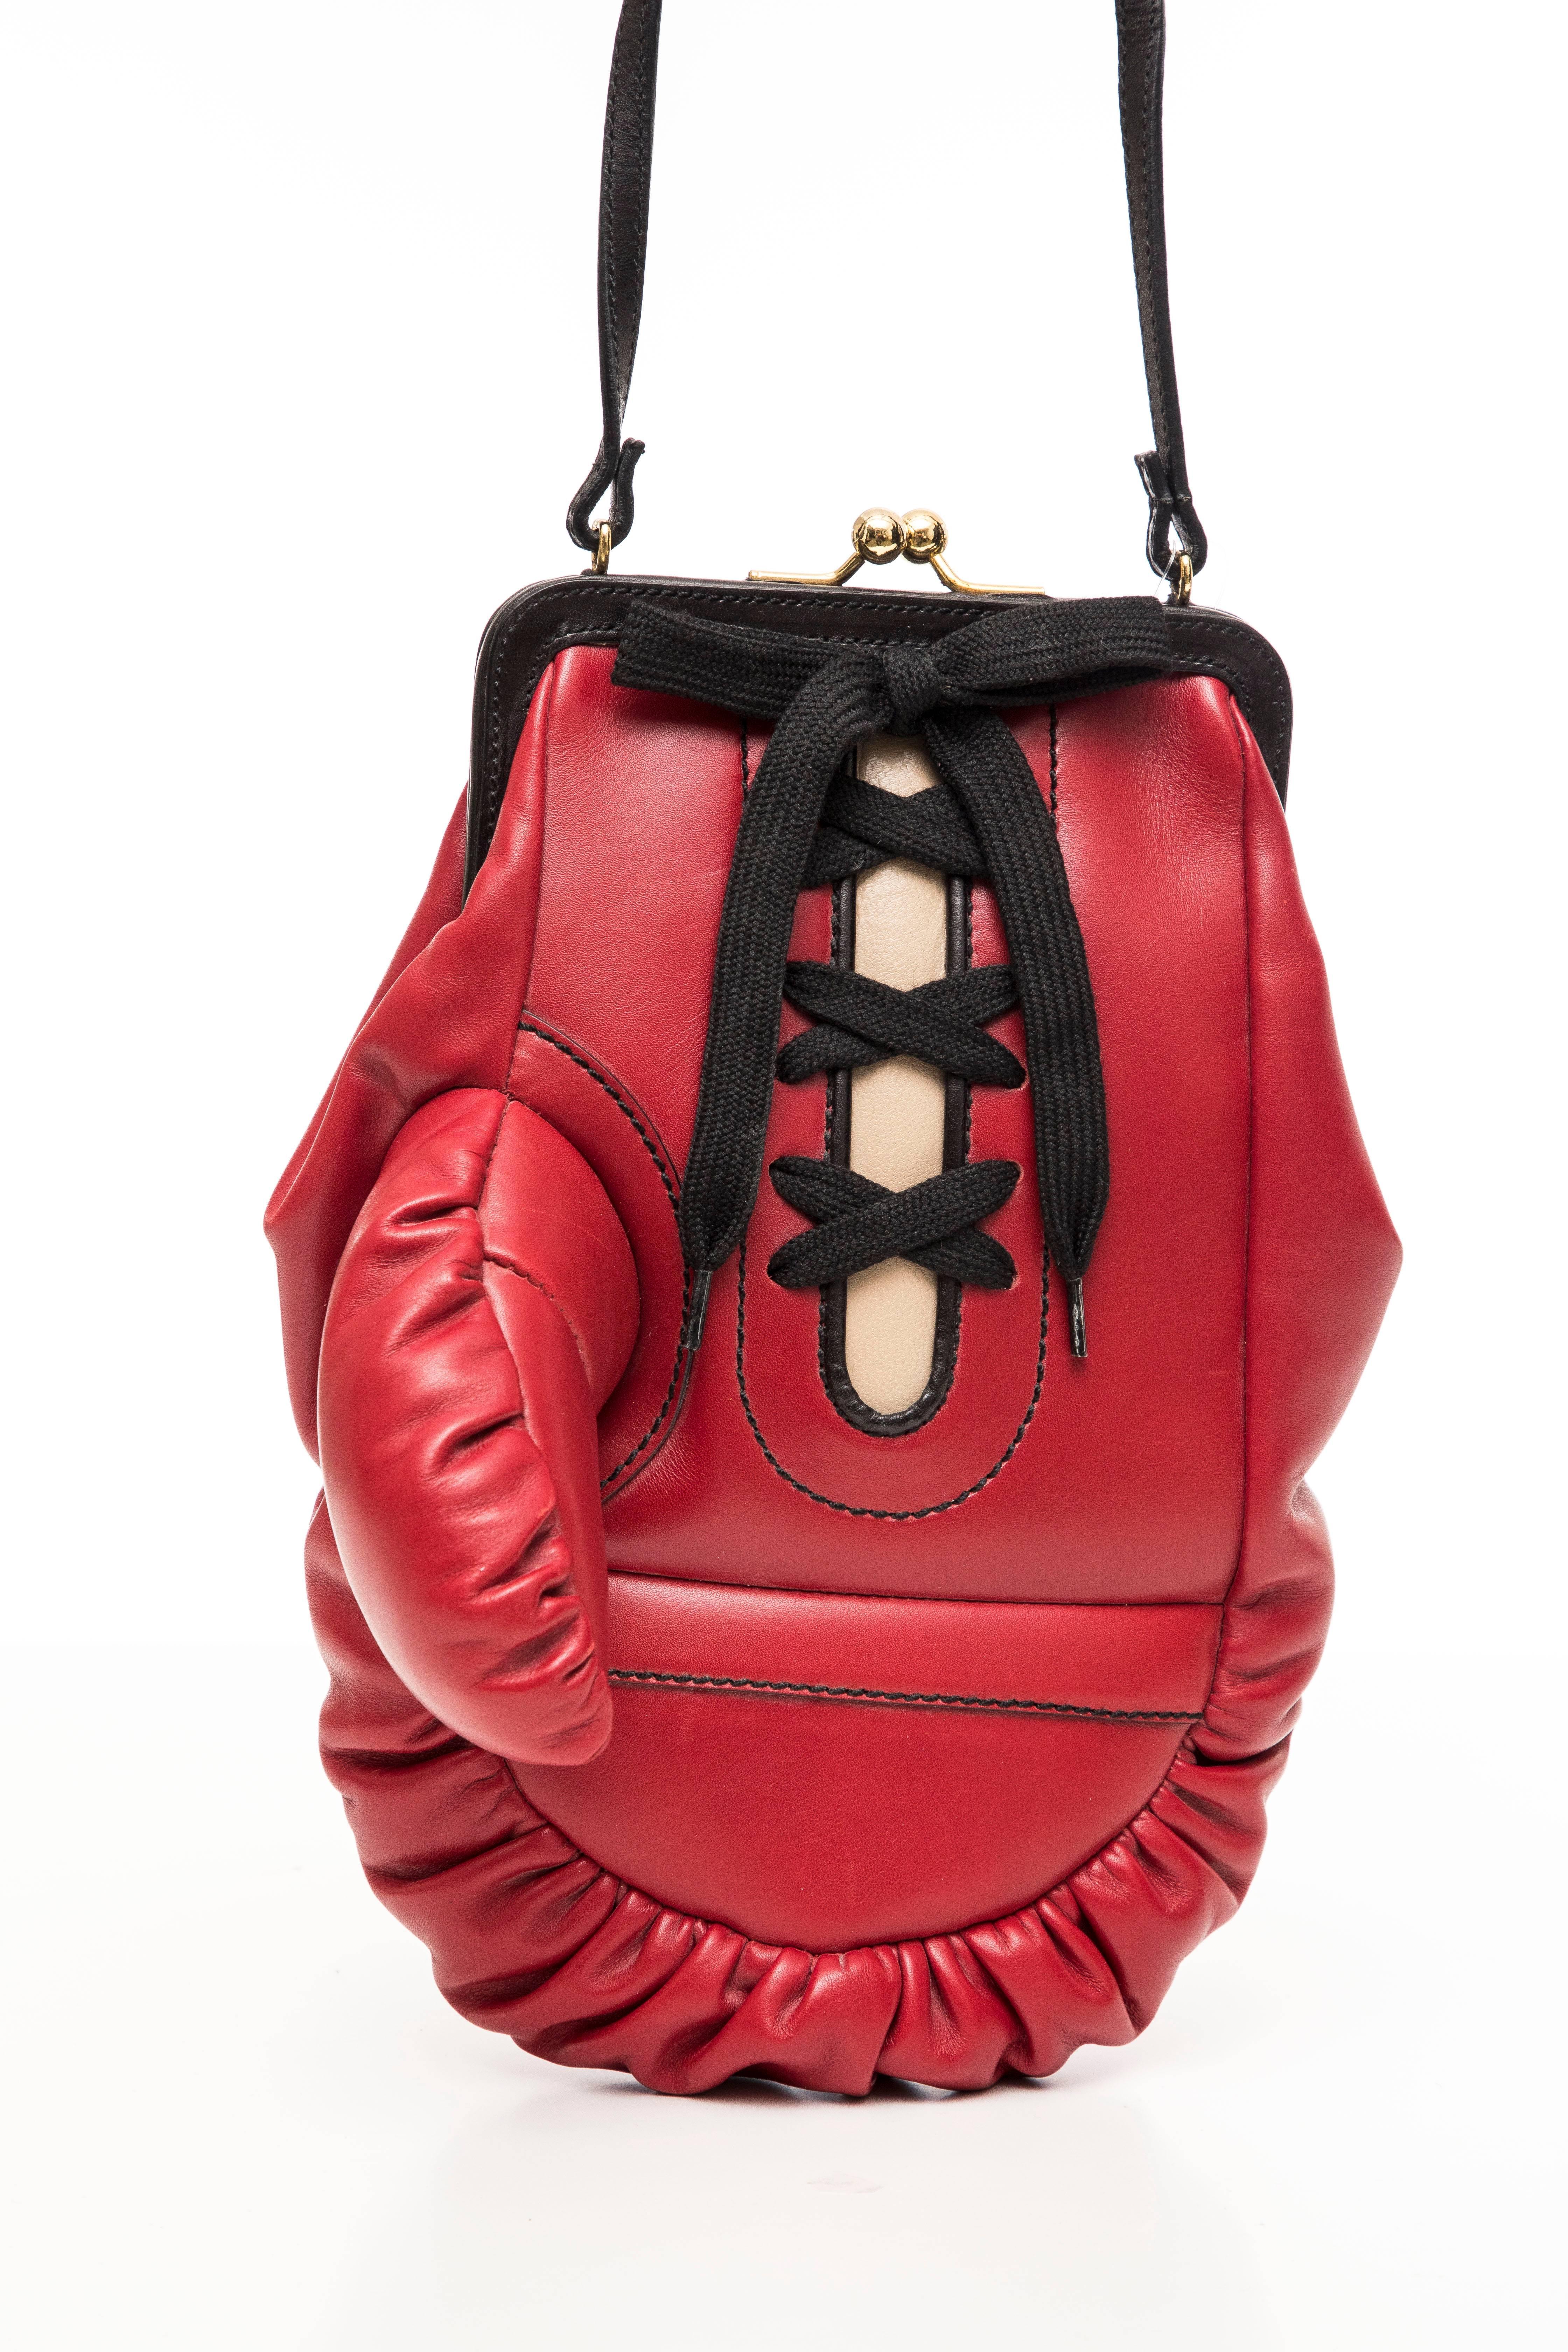 boxing glove bag